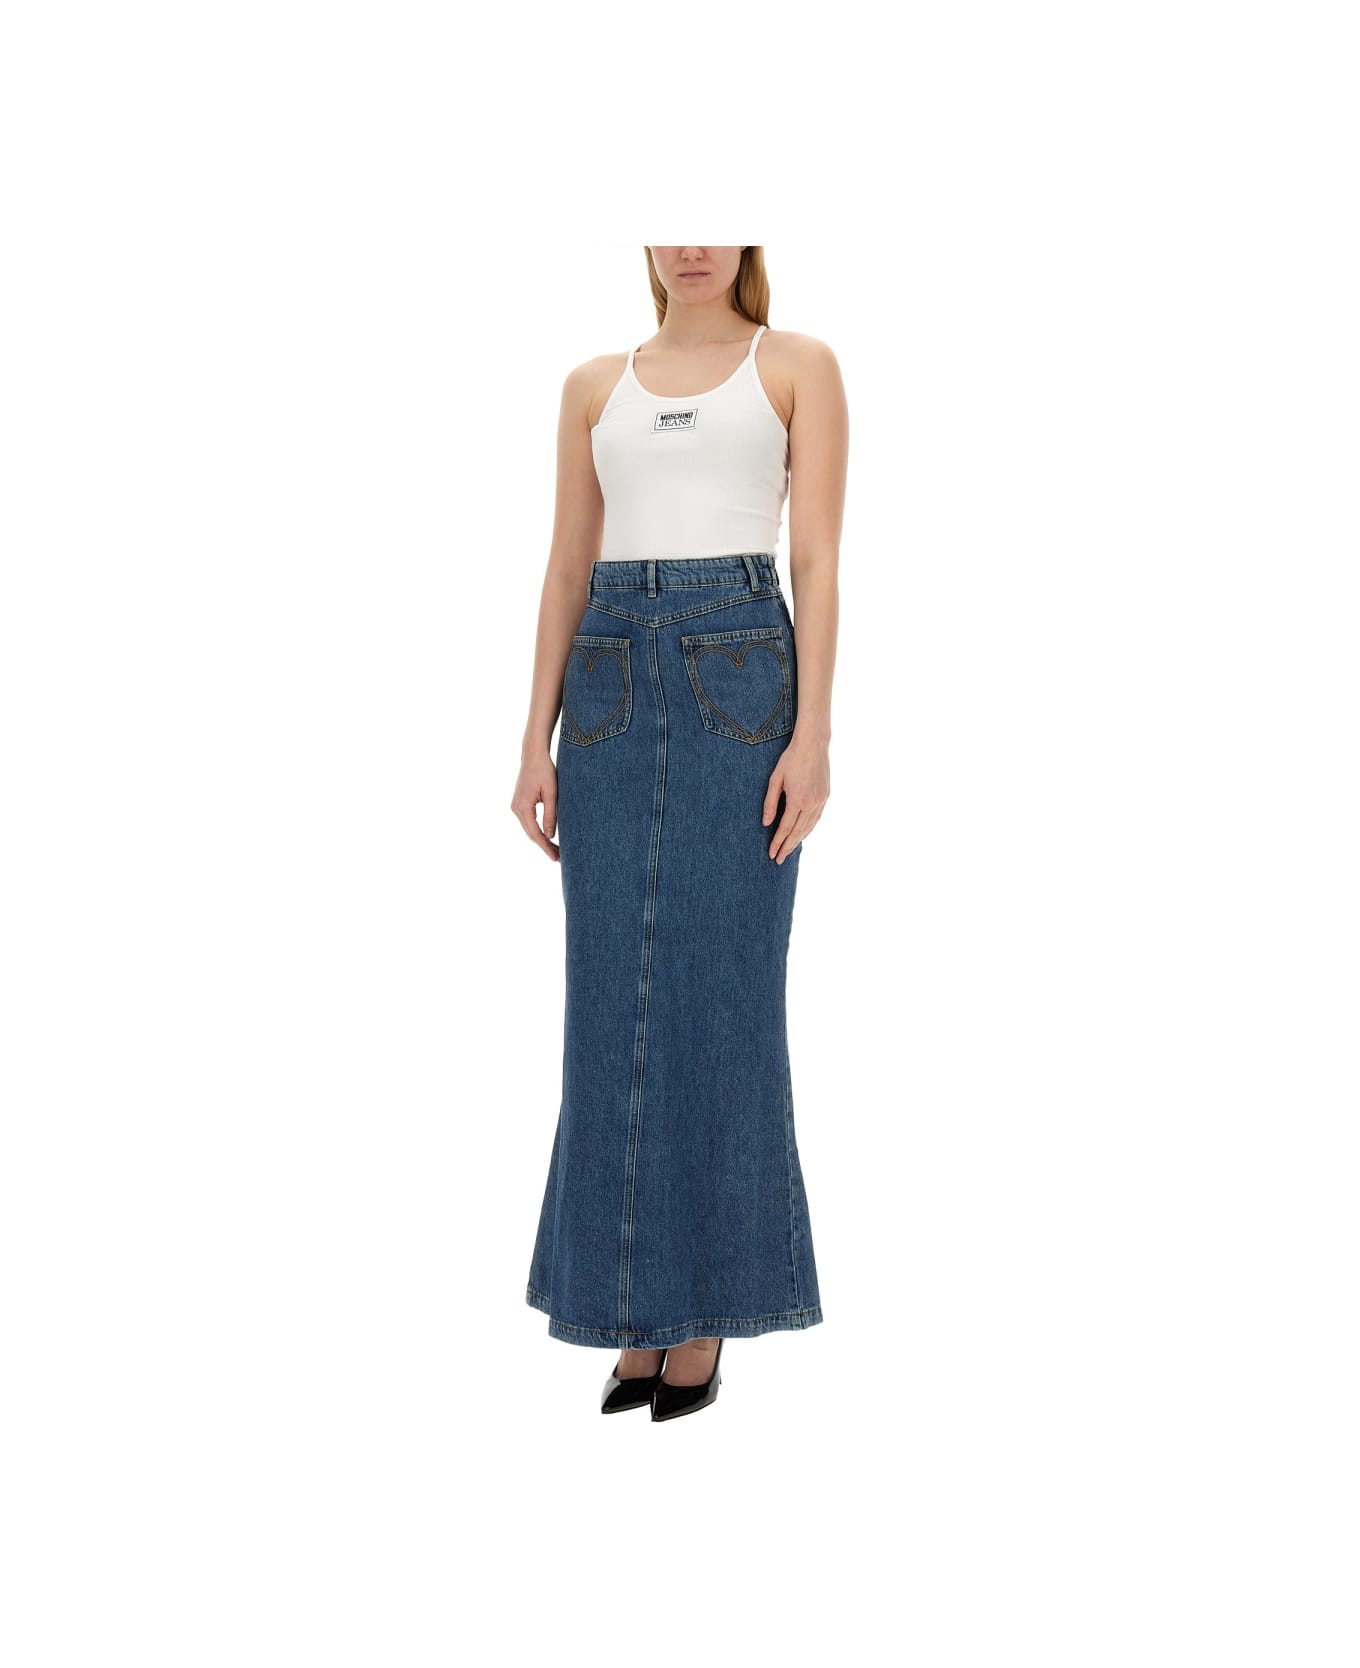 M05CH1N0 Jeans Long Skirt - BLUE